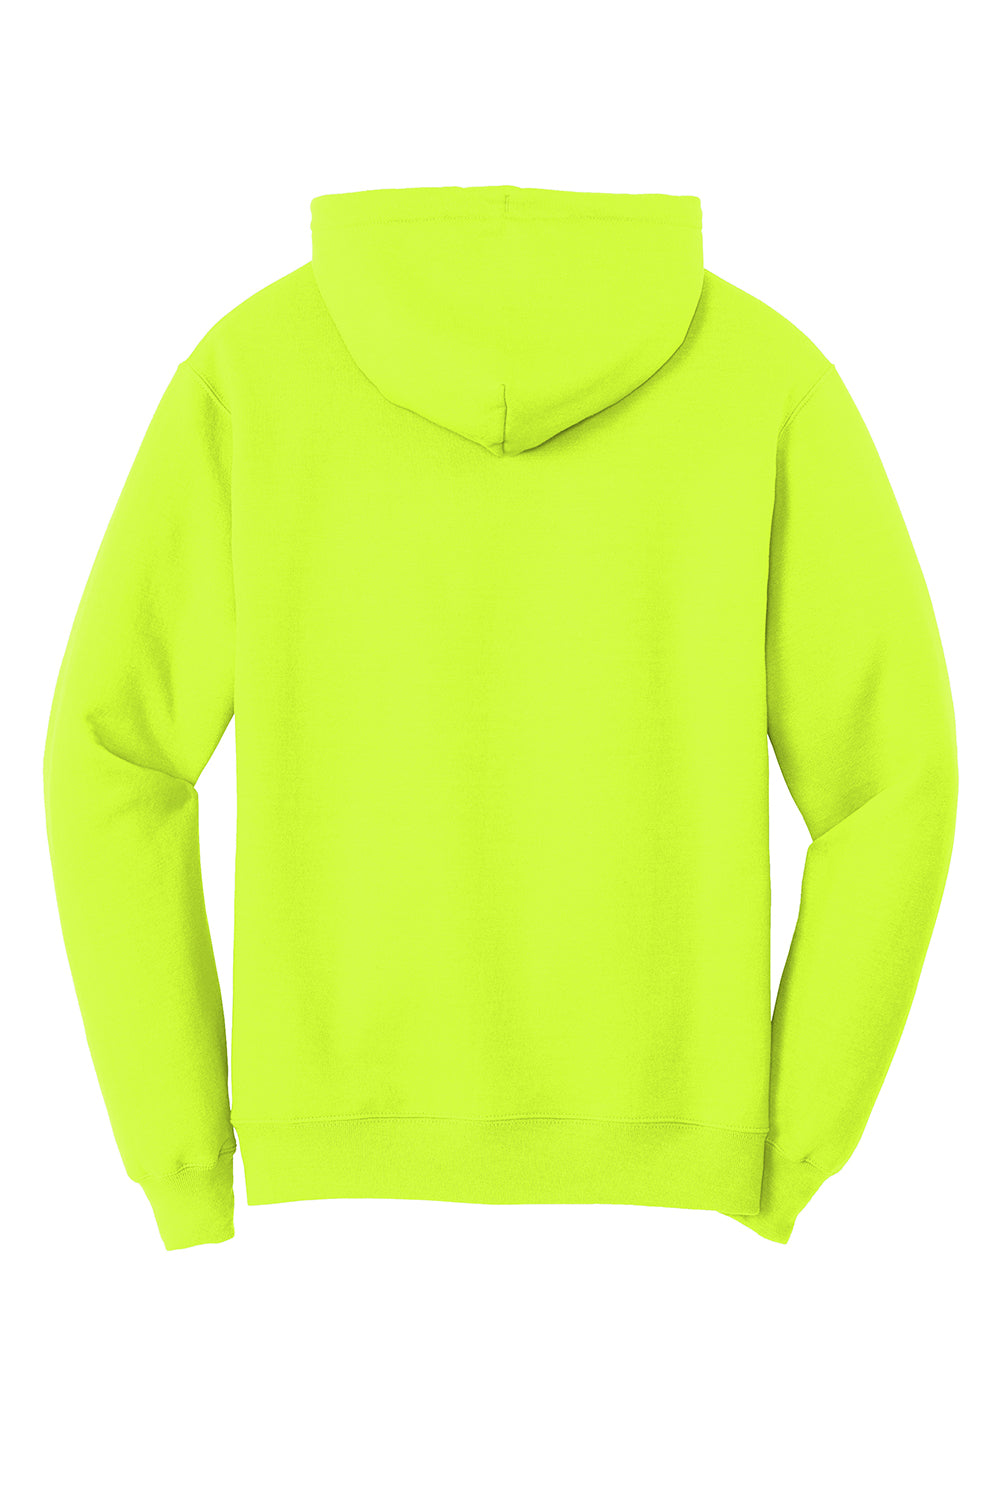 Port & Company PC78H/PC78HT Mens Core Fleece Hooded Sweatshirt Hoodie Safety Green Flat Back